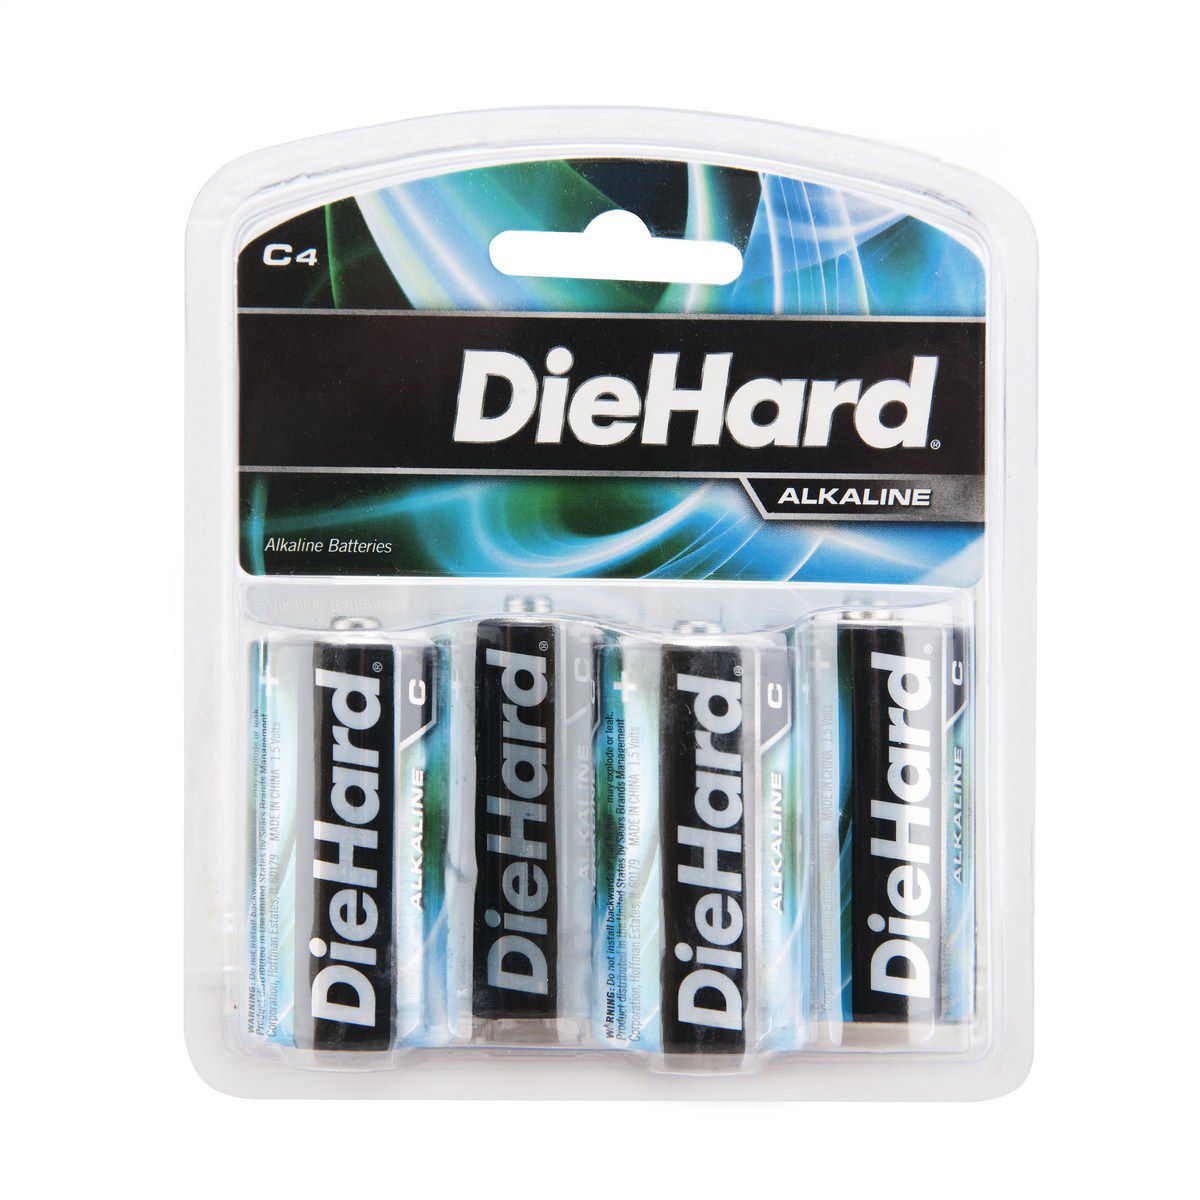 UPC 035355411317 product image for DieHard Die Hard 4 pack C size Alkaline battery - DORCY INTERNATIONAL INC. | upcitemdb.com